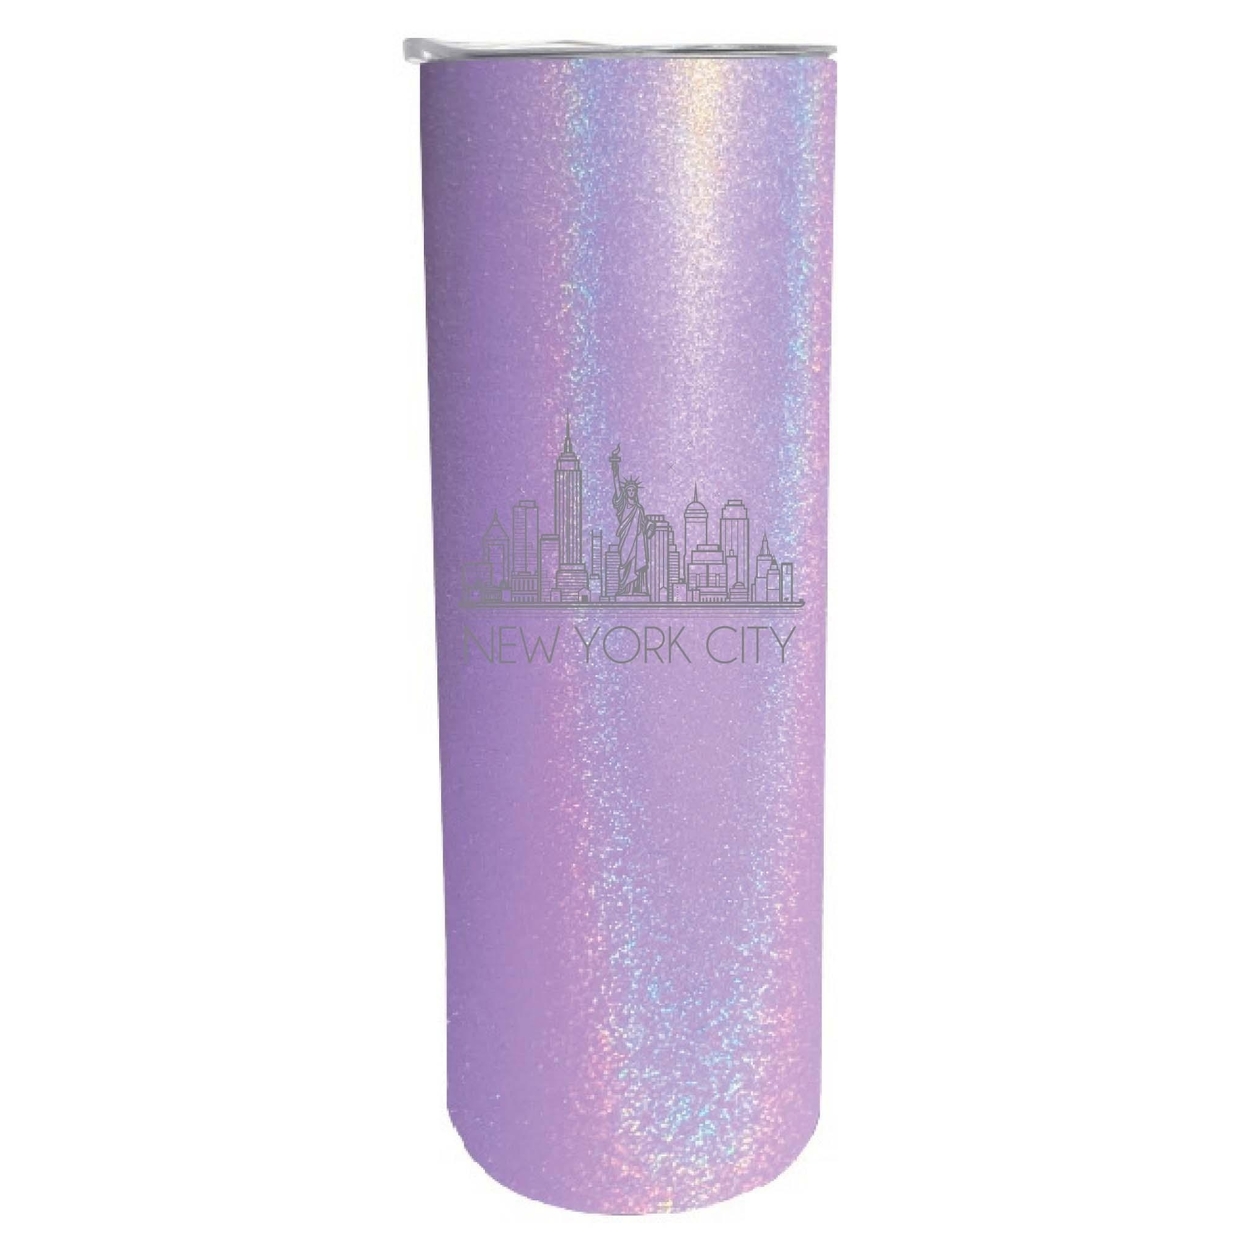 New York City Souvenir 20 Oz Engraved Insulated Skinny Tumbler Glitter - Purple Glitter,,4-Pack